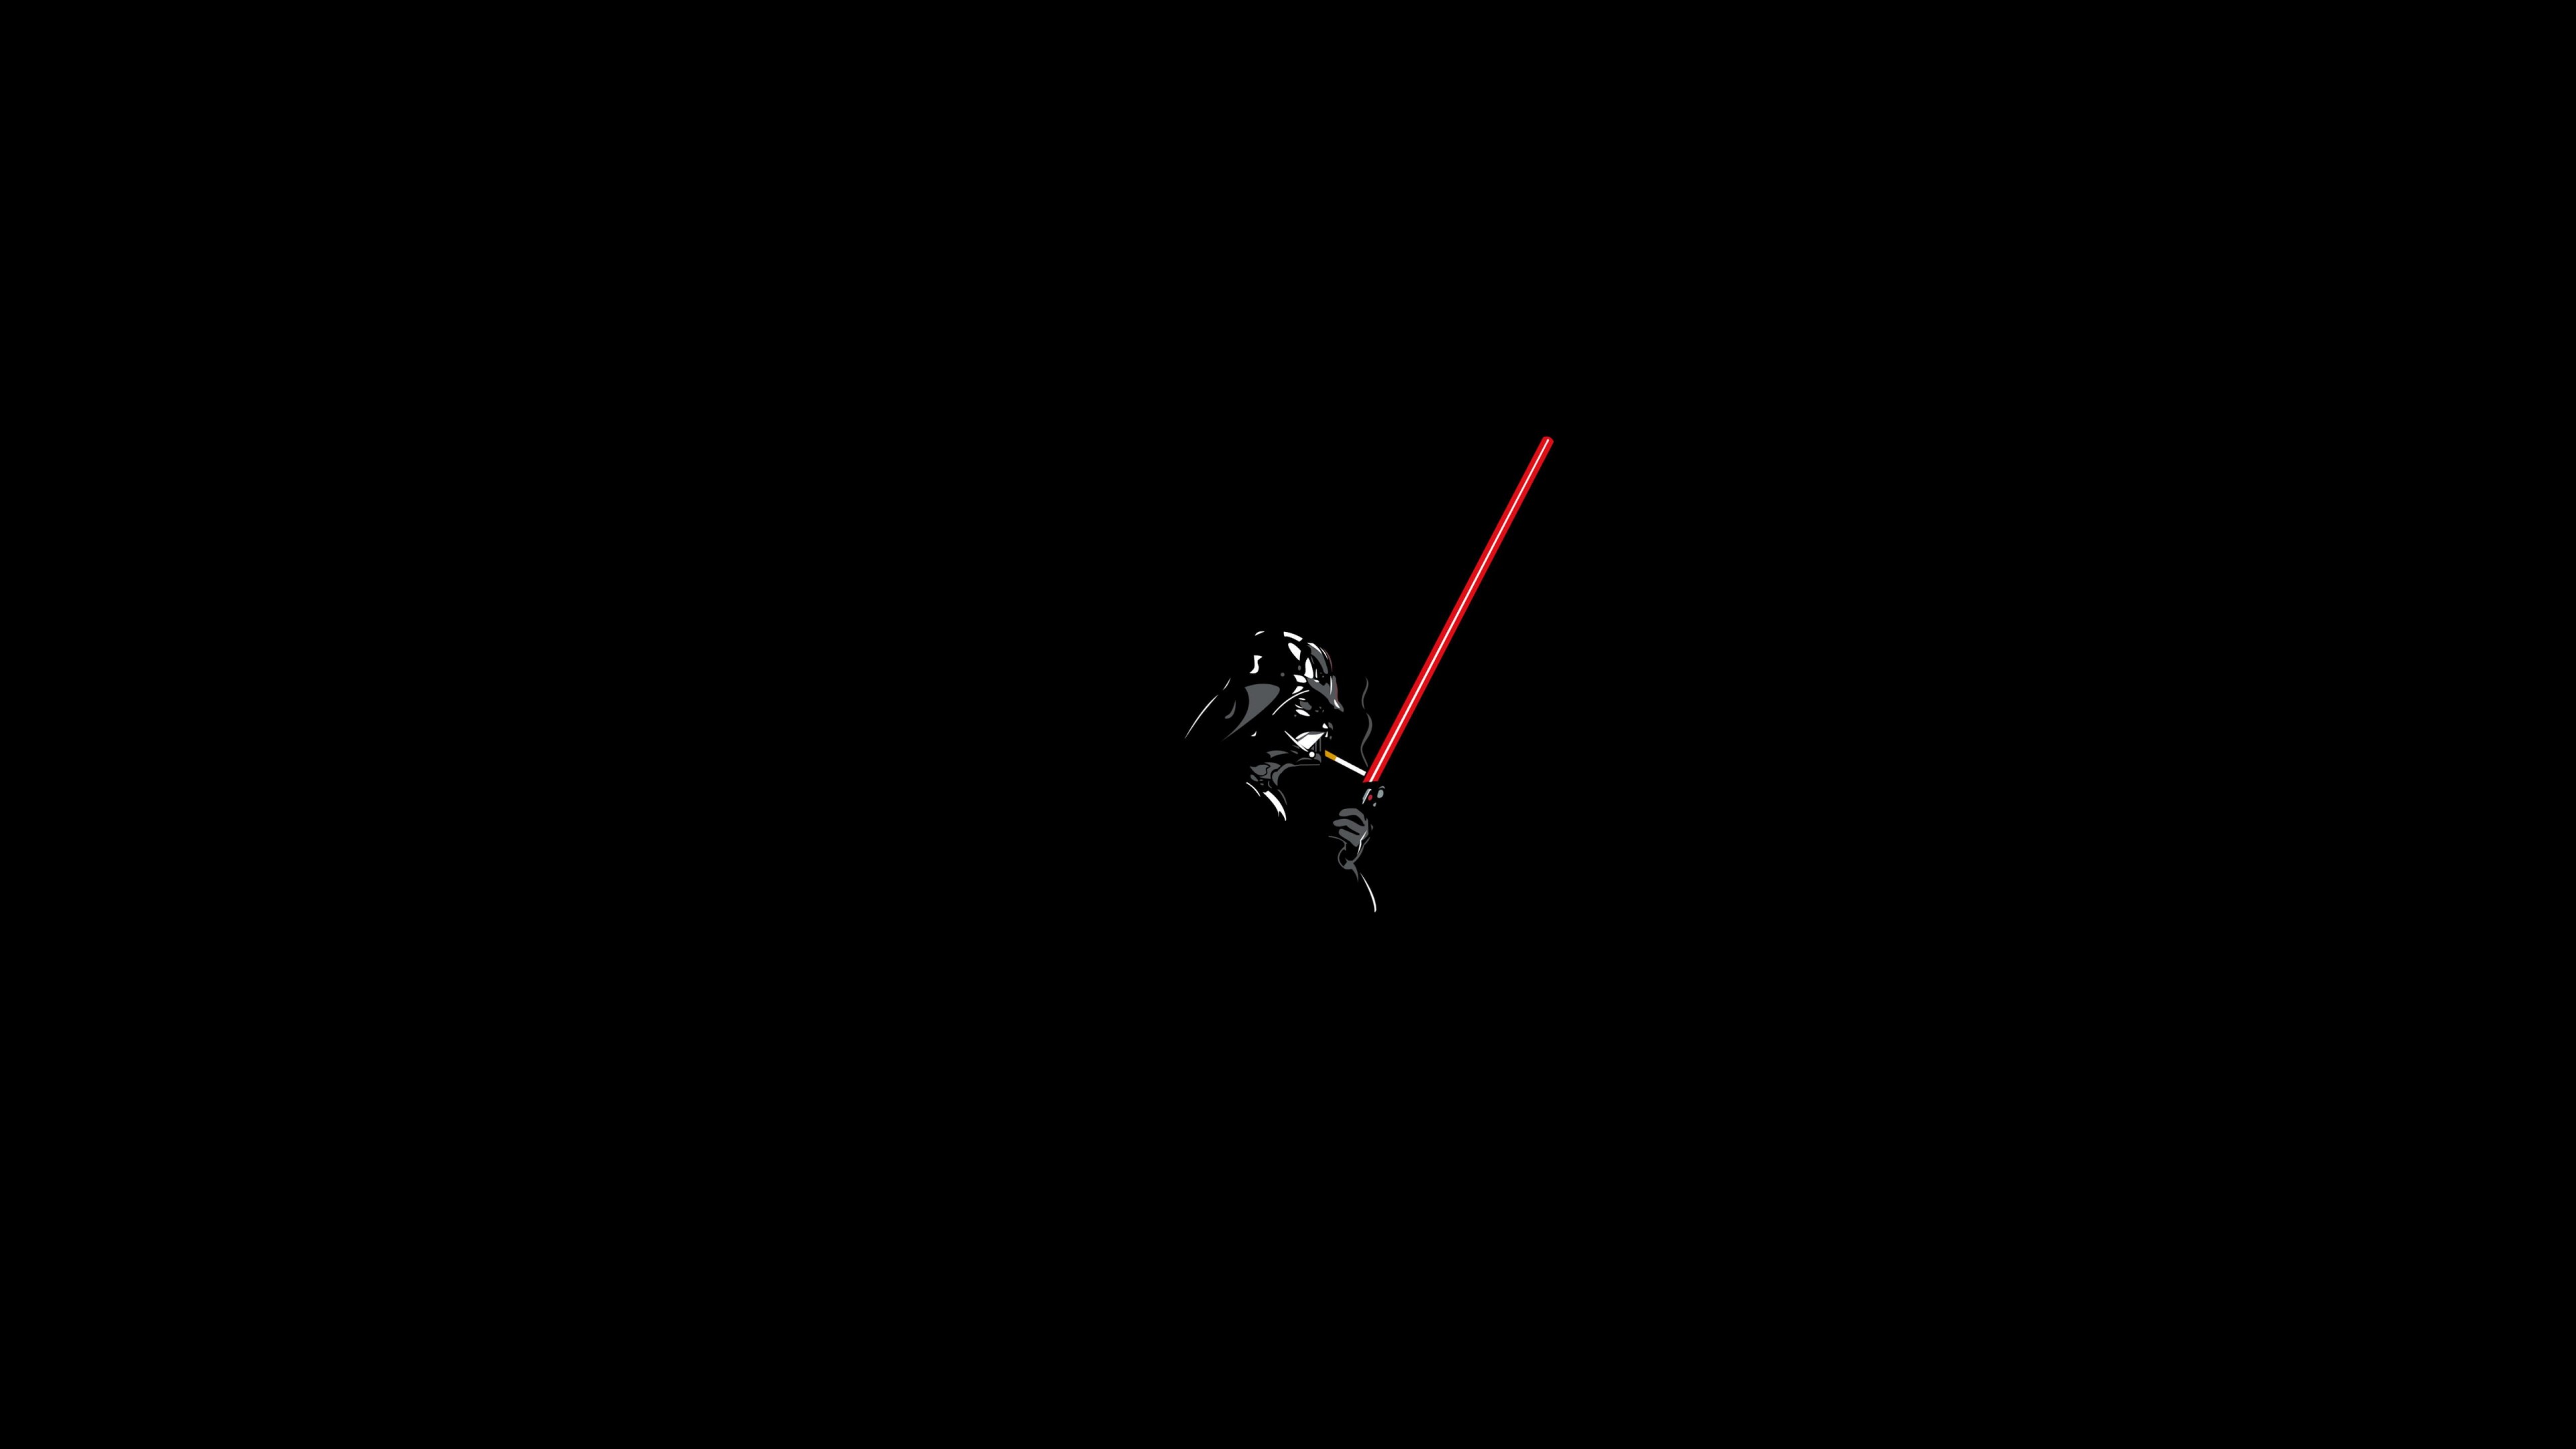 Darth Vader Lighting a Cigarette Wallpaper for Desktop 4K 3840x2160